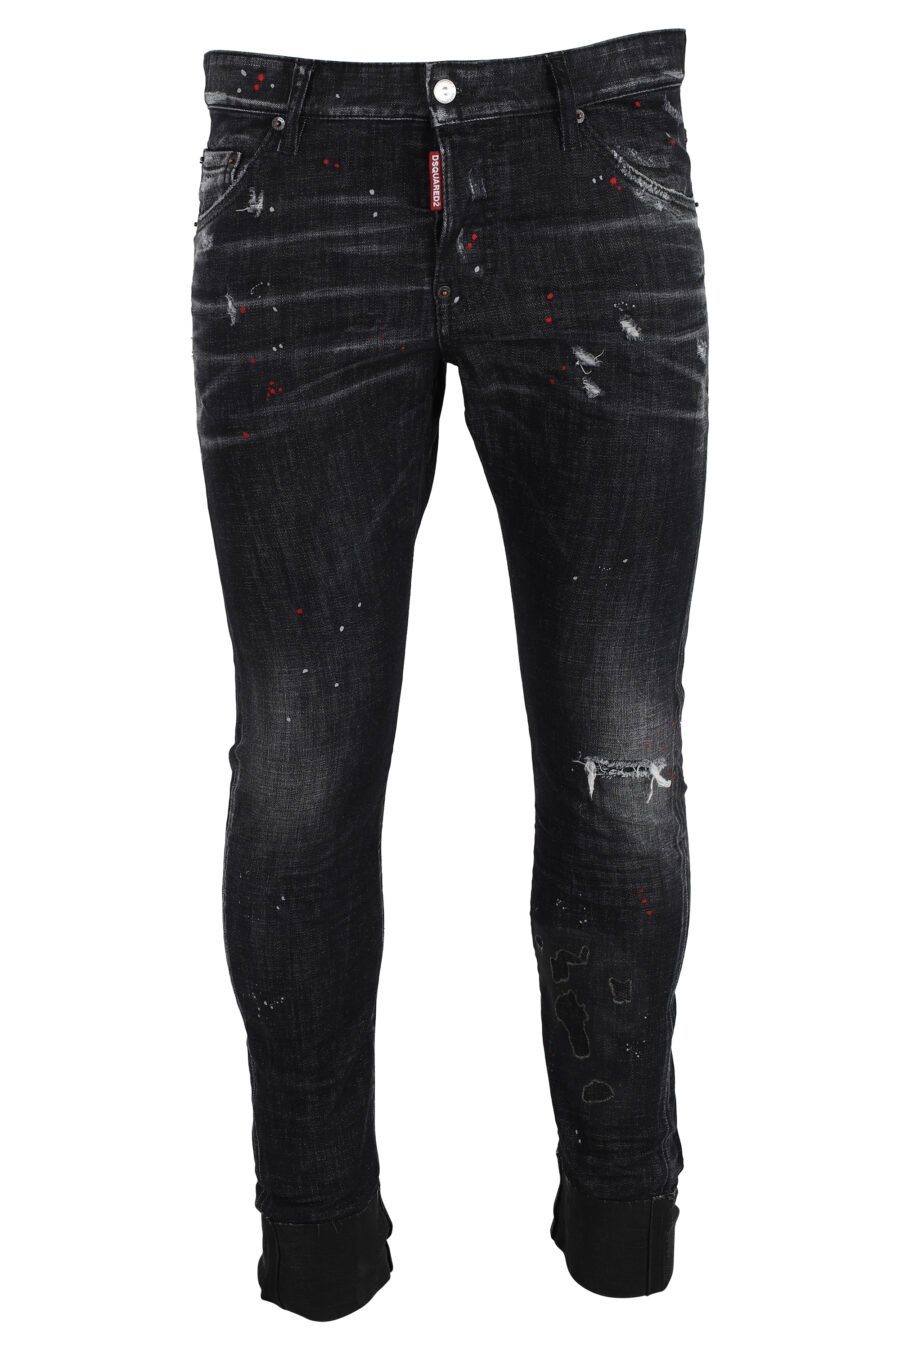 Pantalon en jean torsadé sexy noir effiloché - IMG 4852